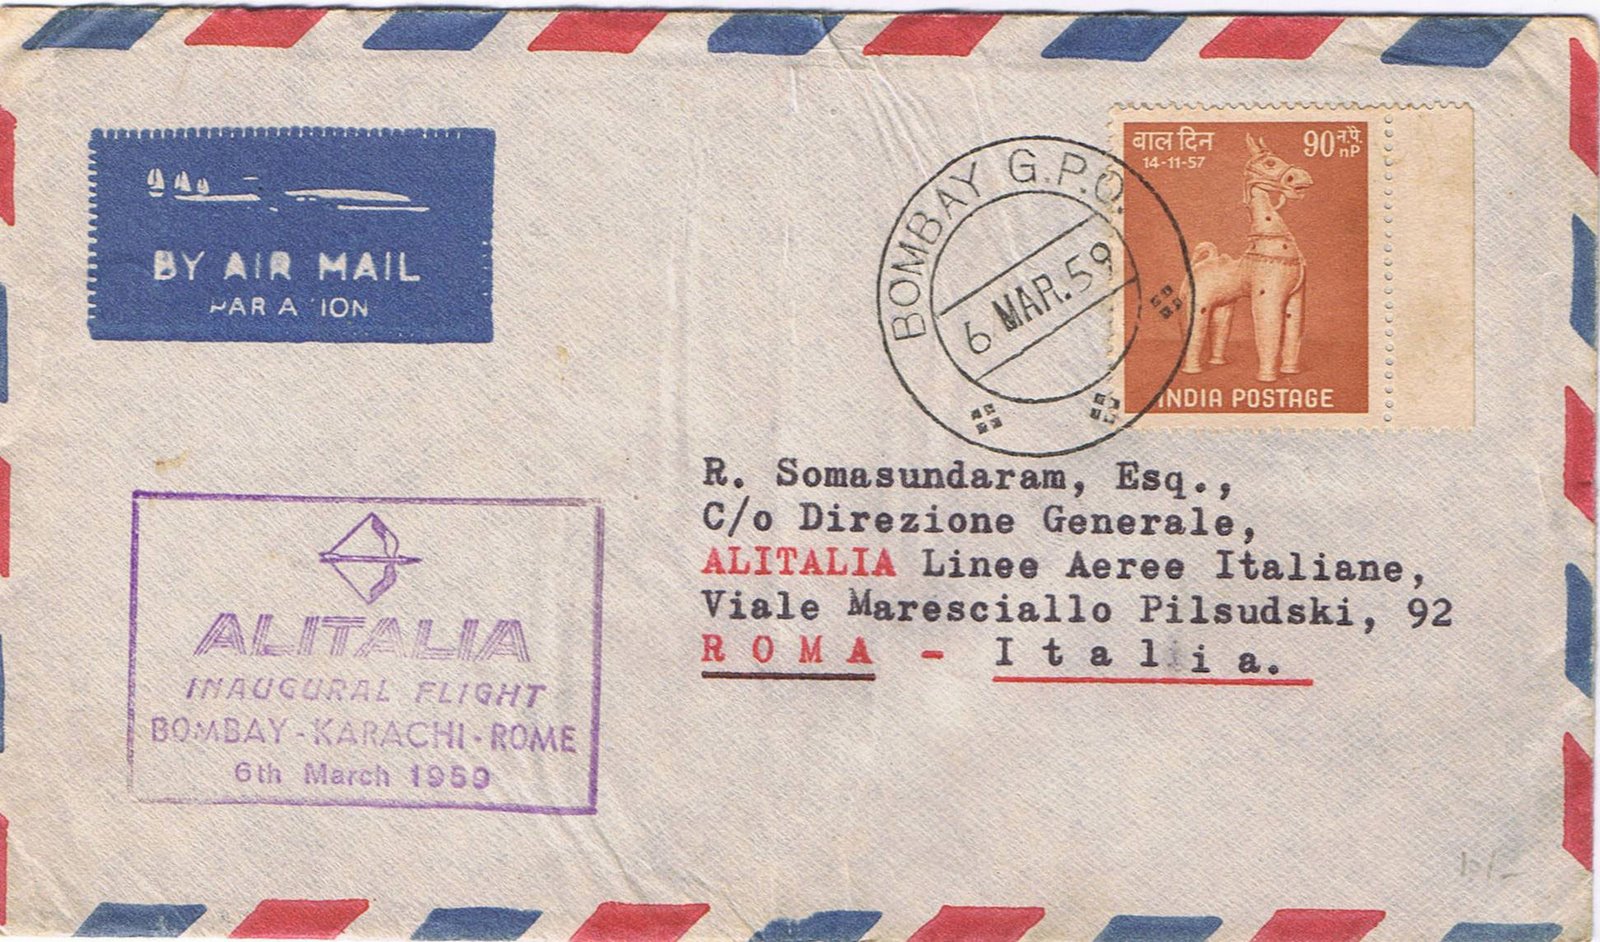 [1959-Bombay-Rome.jpg]